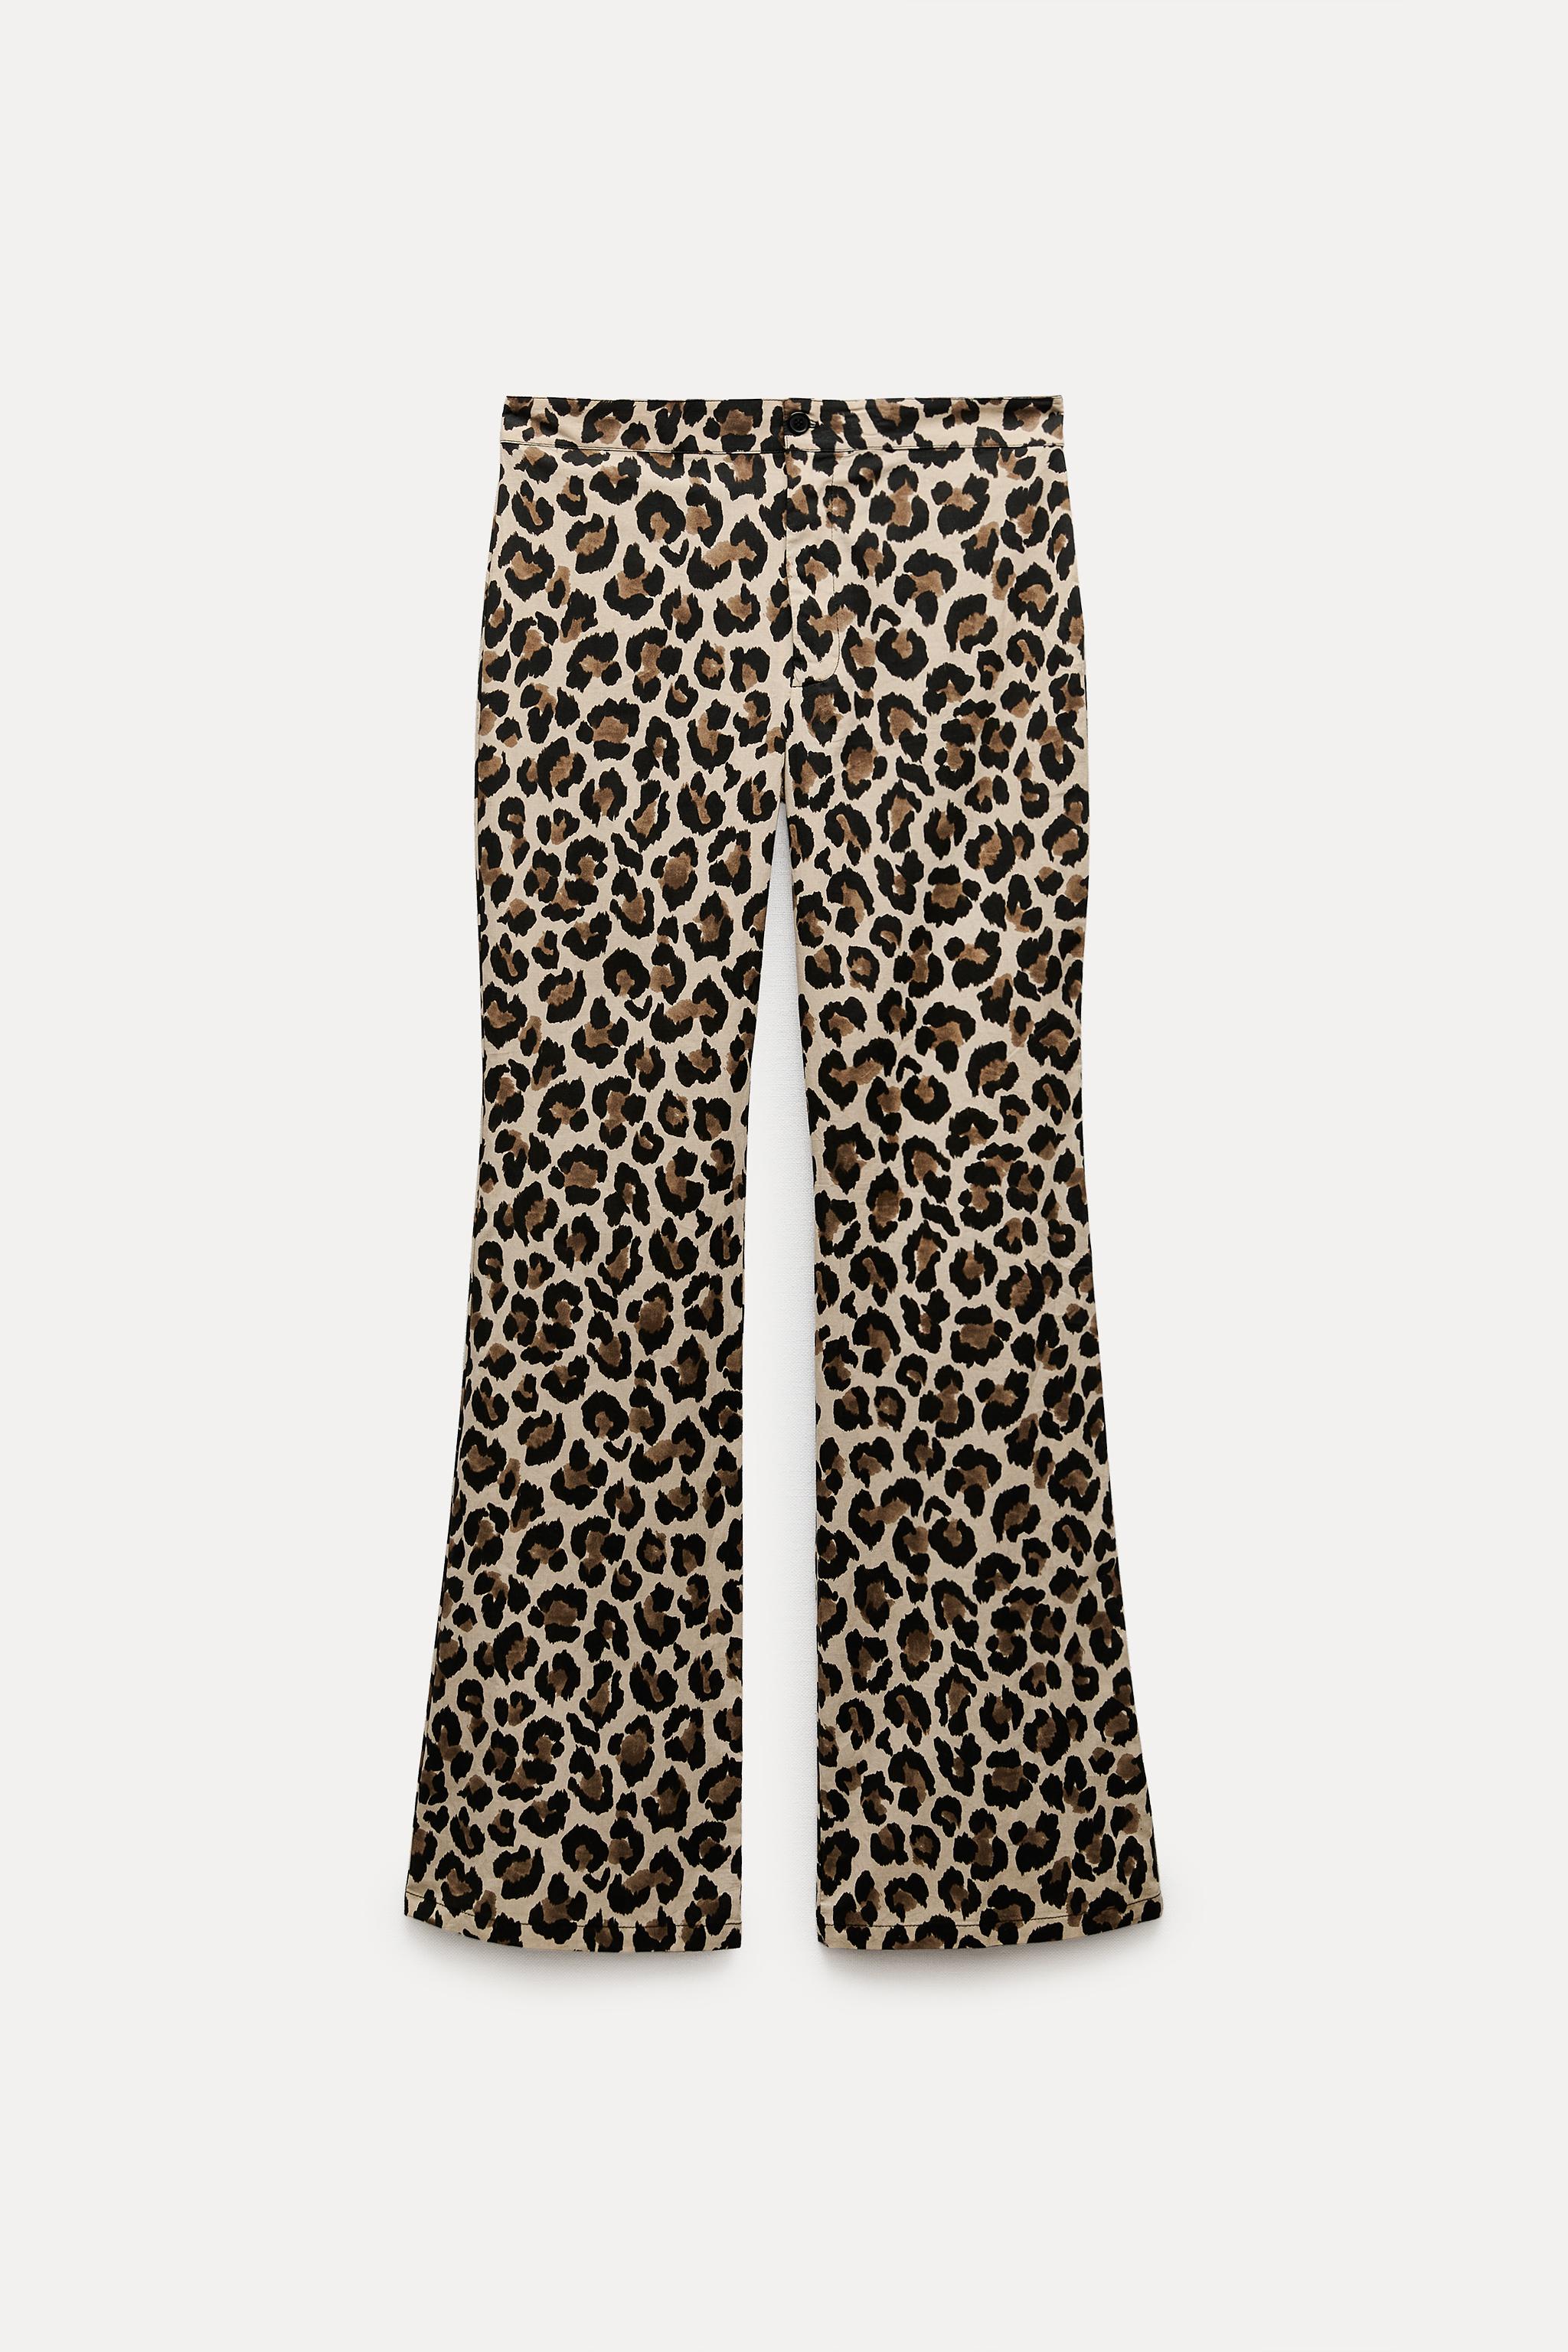 Animal print loose trousers - Zara - Telegraph